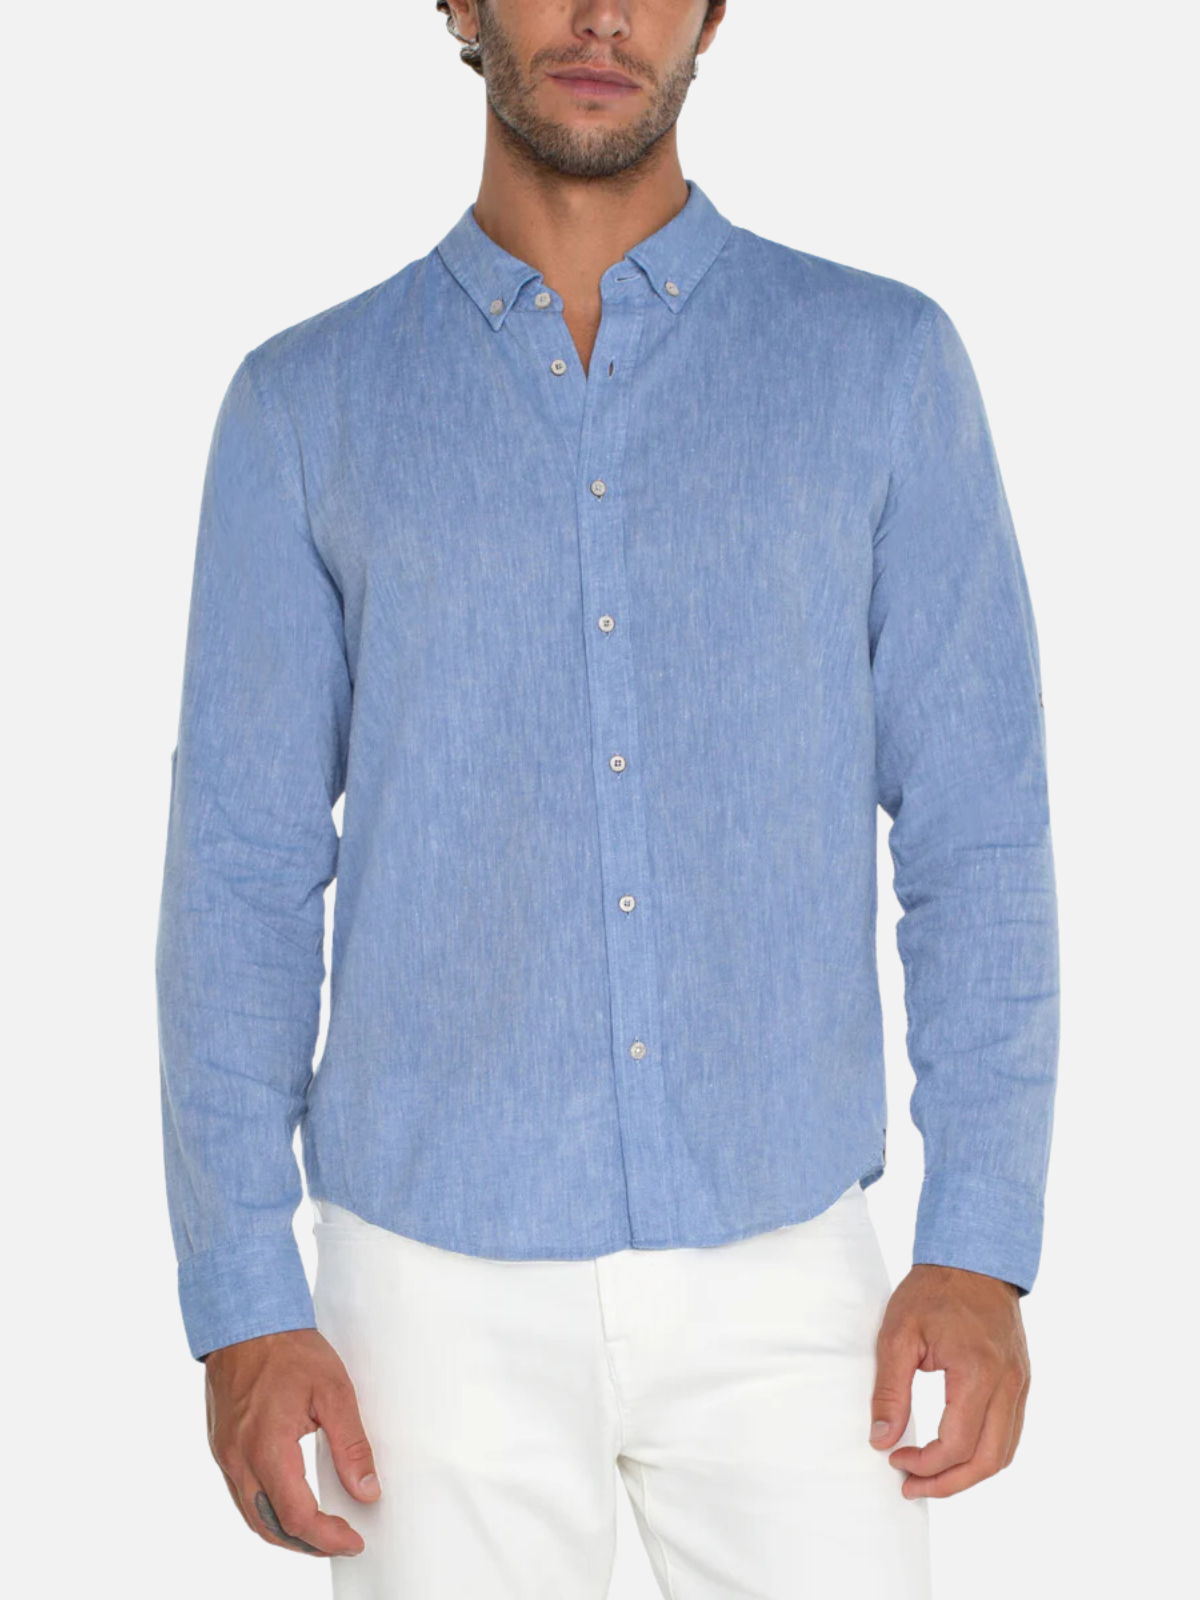 liverpool convertible sleeve ls button up casual oxford shirt cotton linen blend light blue kempt athens ga georgia men's clothing store